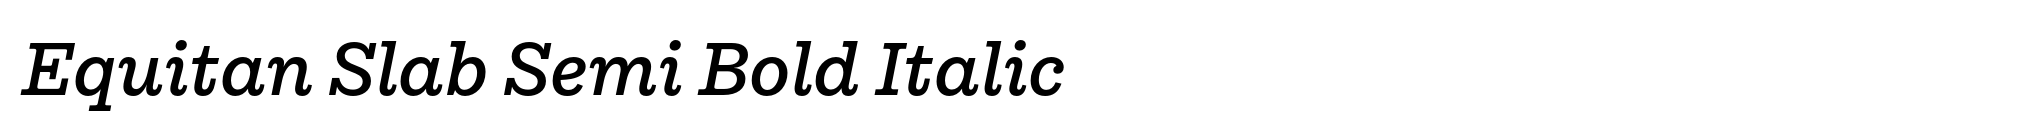 Equitan Slab Semi Bold Italic image